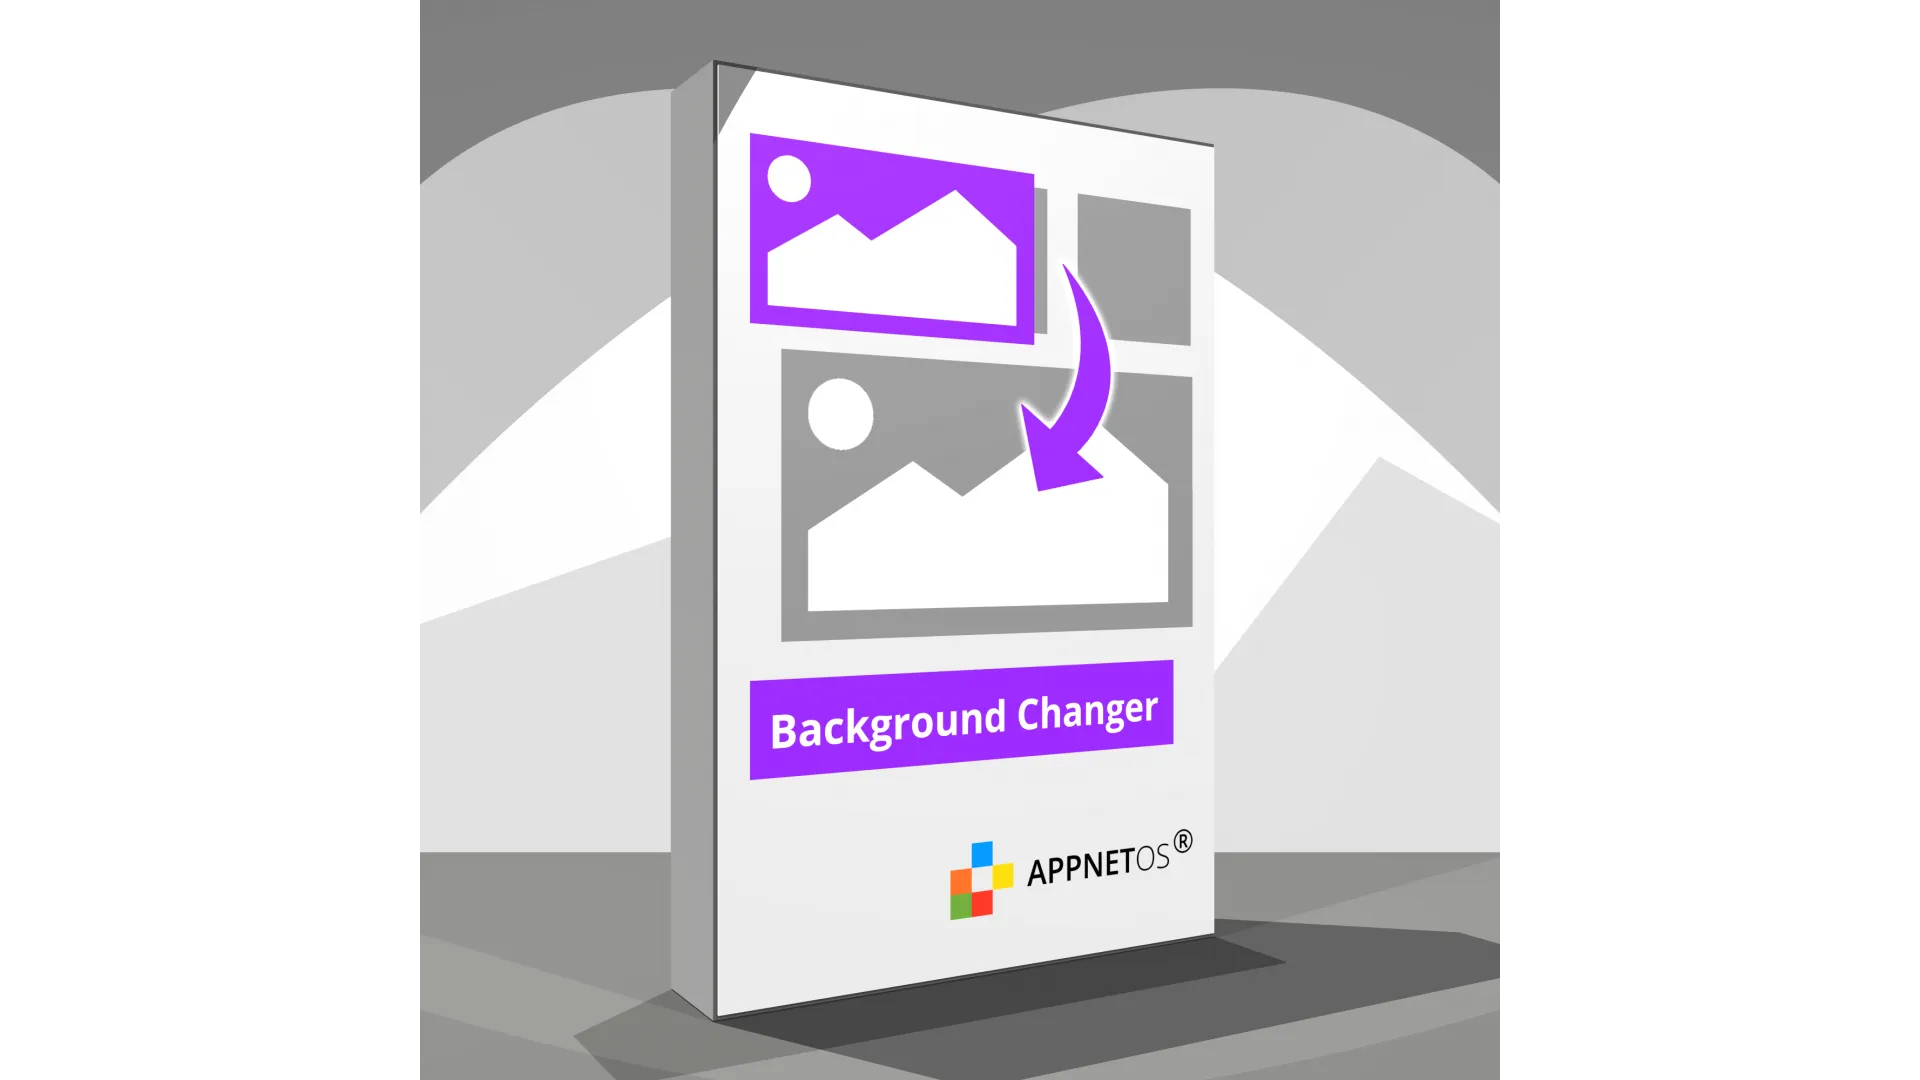 APPNET OS Background Changer